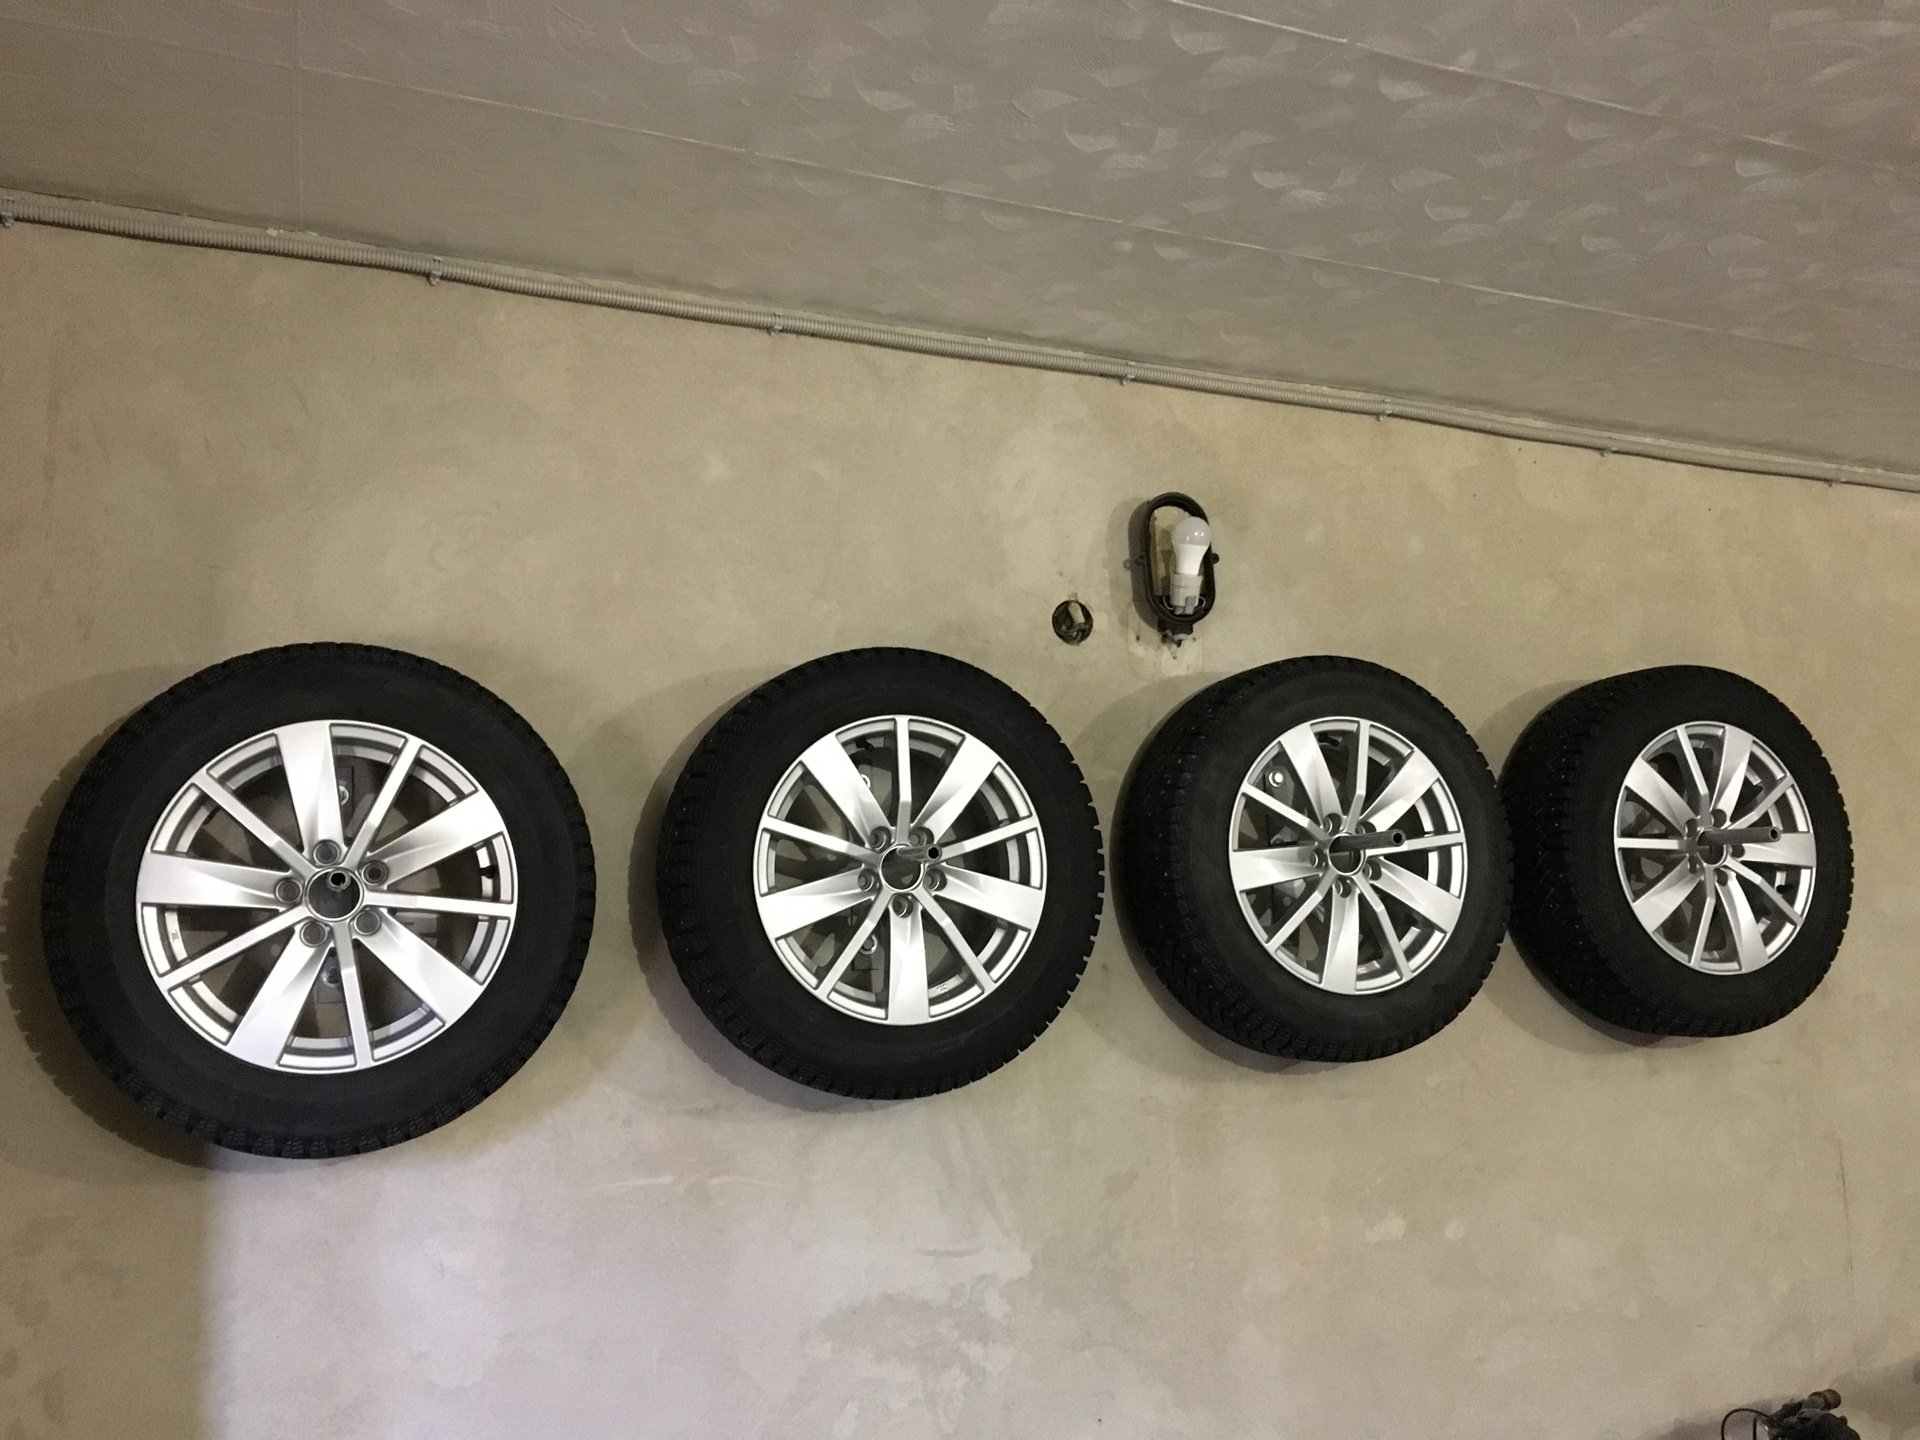 Кронштейн для колес на стену. Подвес для хранения колес. Кронштейн для колес на стену в гараже. Кронштейн для хранения колес на стене.